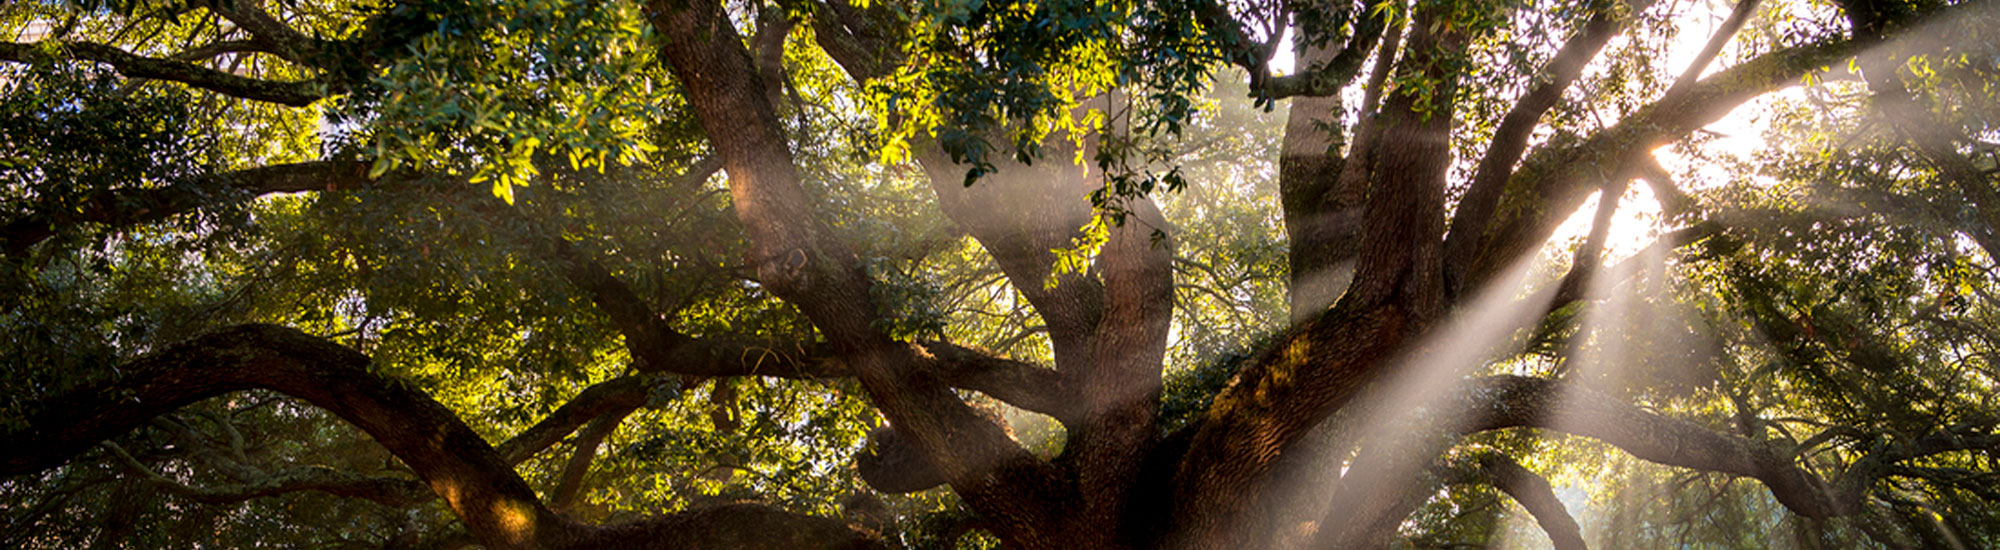 sunlight streams through oak tree